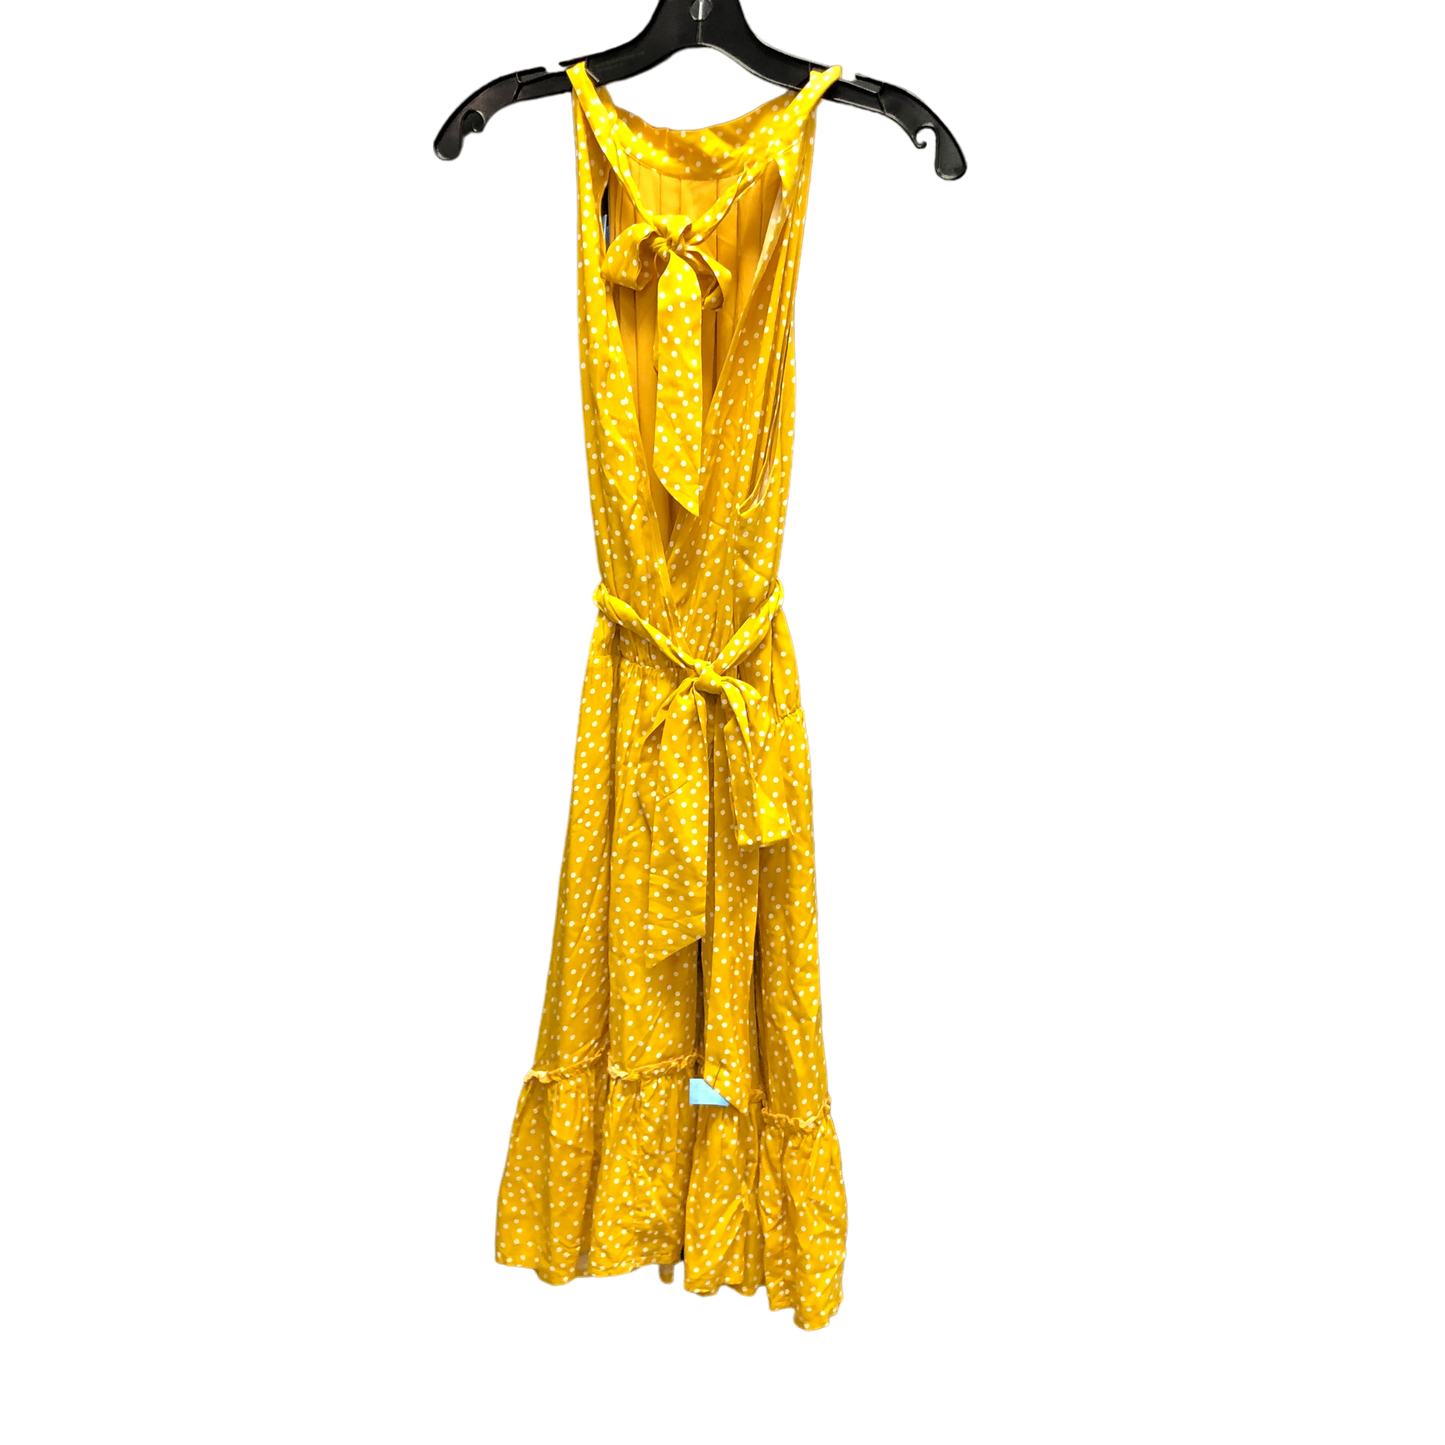 Yellow Dress Casual Short BTFBM, Size L